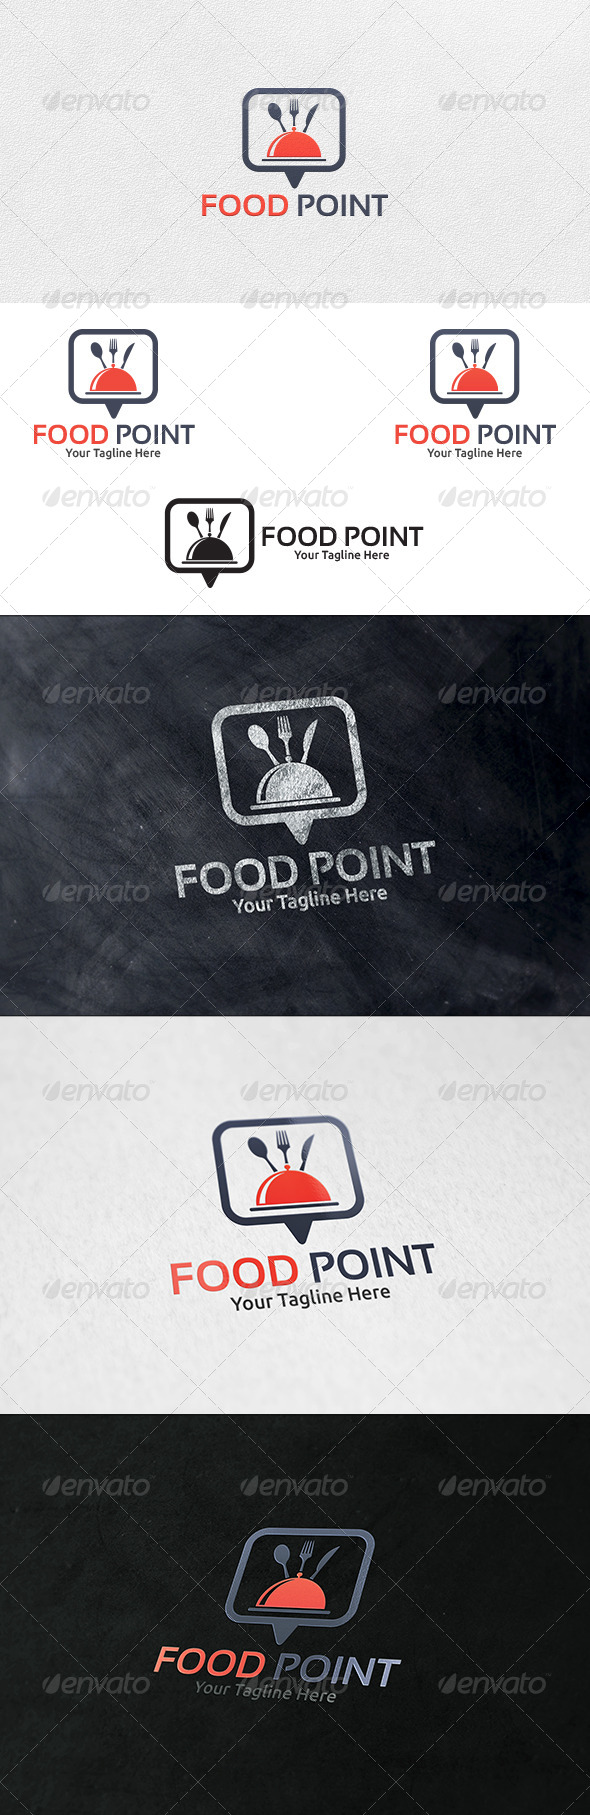 Food Point V2 - Logo Template